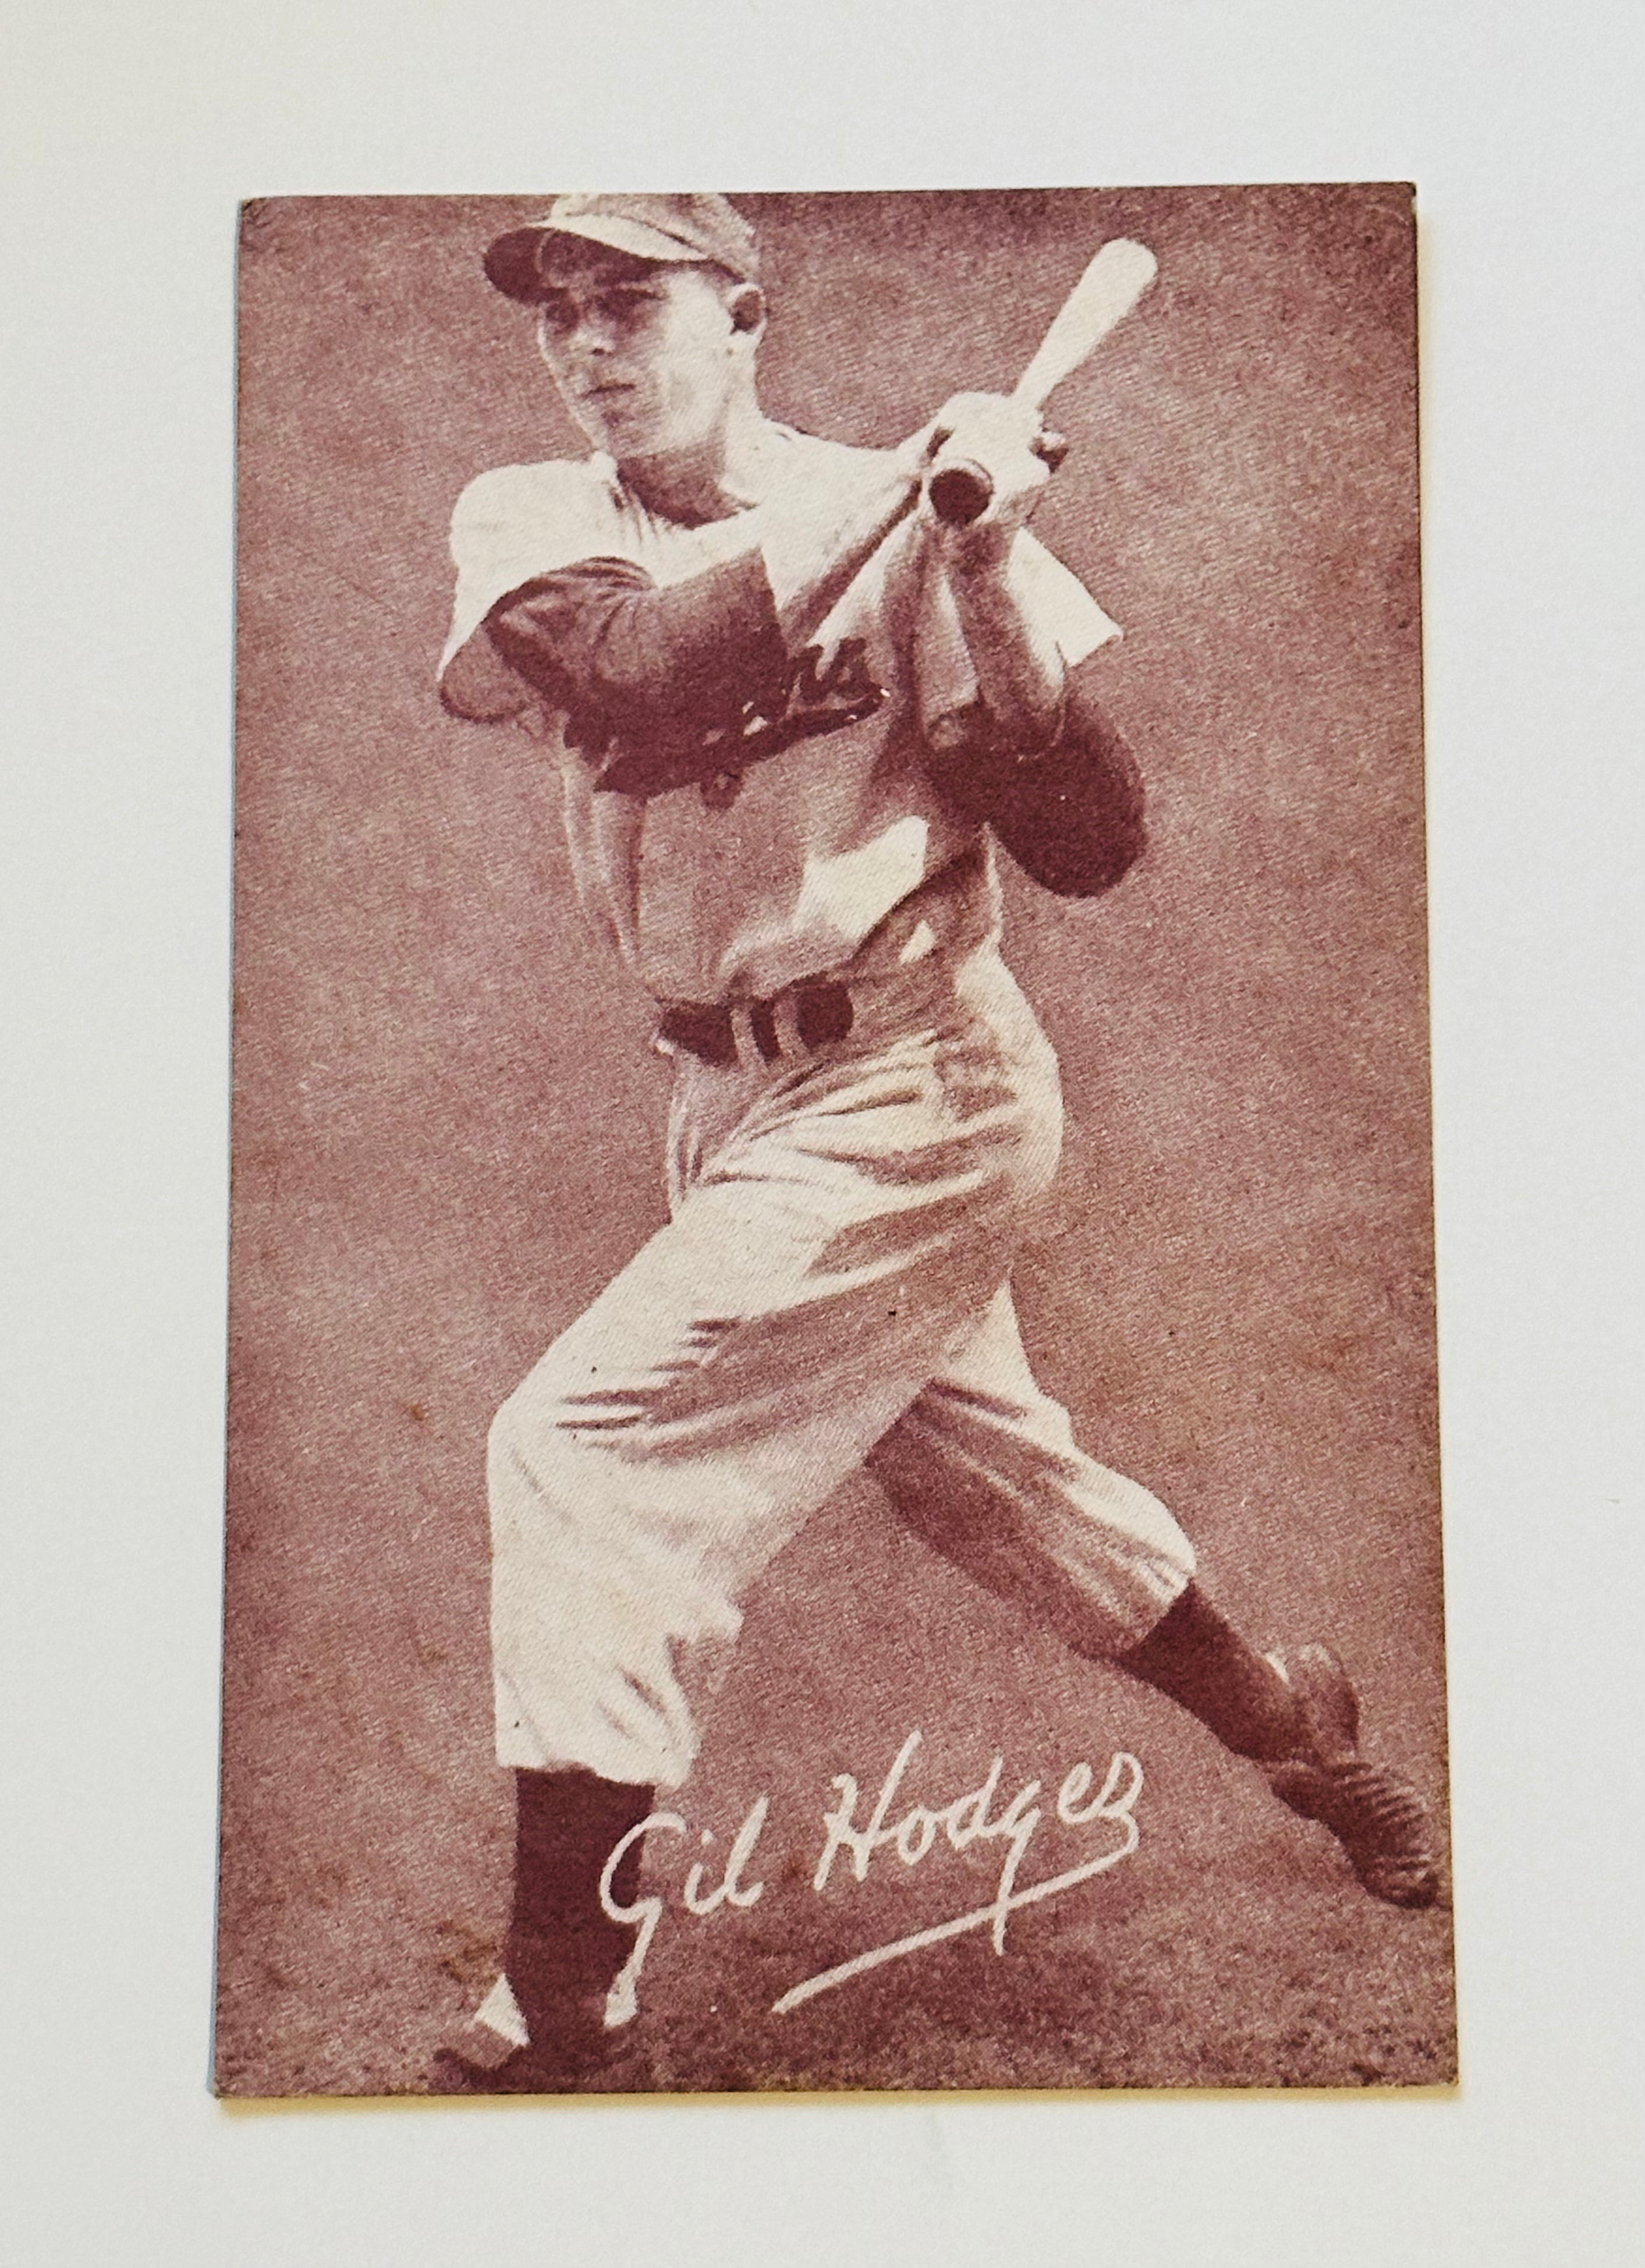 Gil Hodges rare baseball Exhibit card 1947